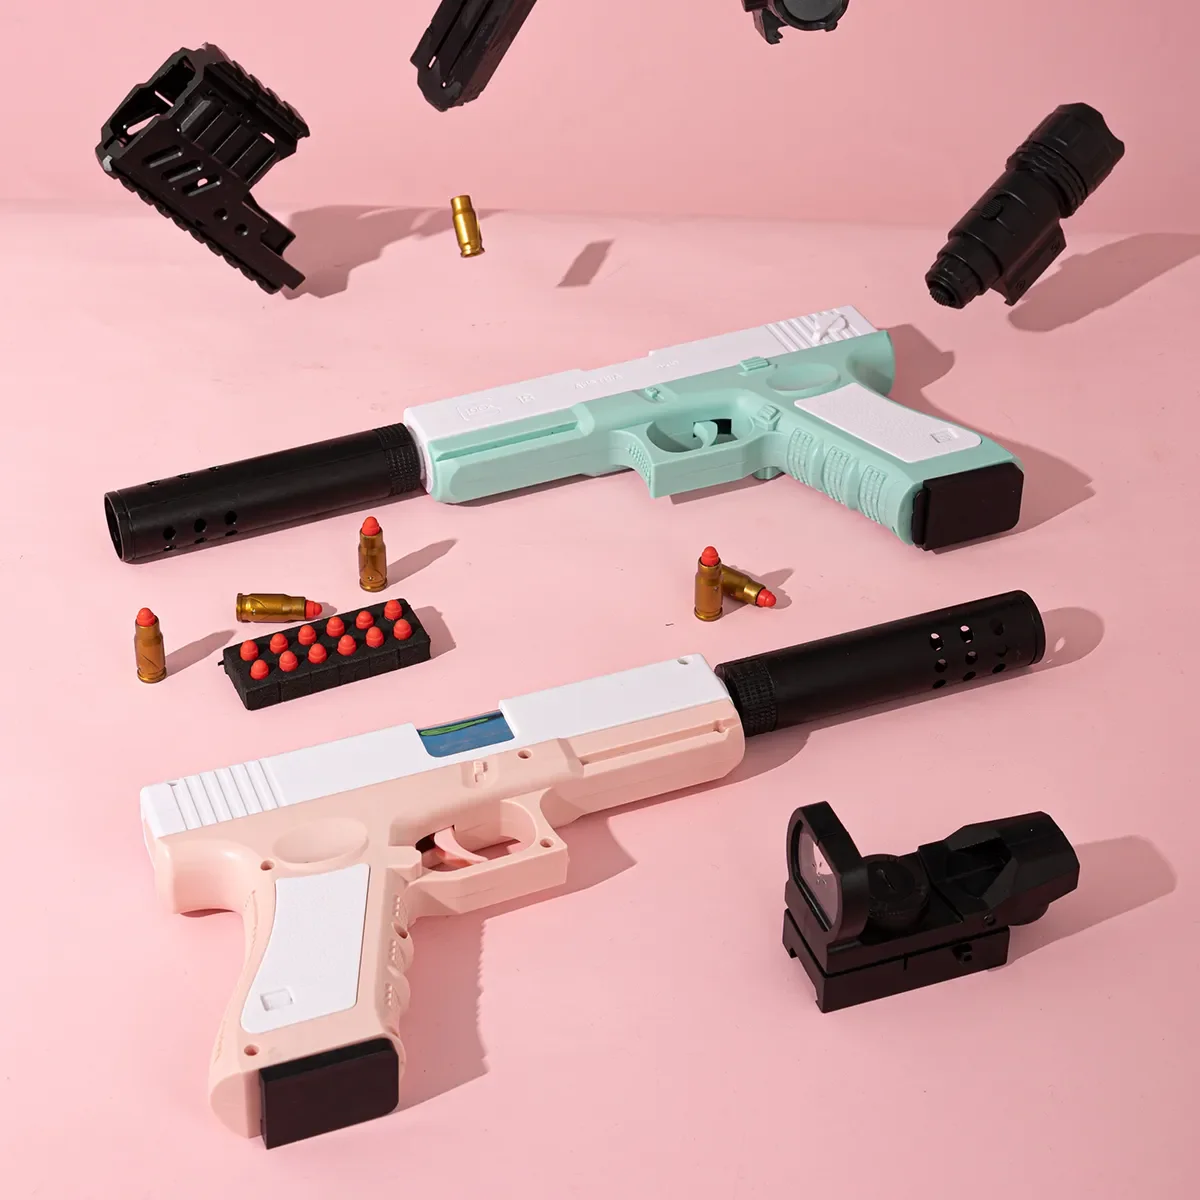 

Glock Toy Gun Soft Bullet Pistol Shell Ejection Blaster Handgun Plastic Shooting Model For Kids Adult Outdoor Game